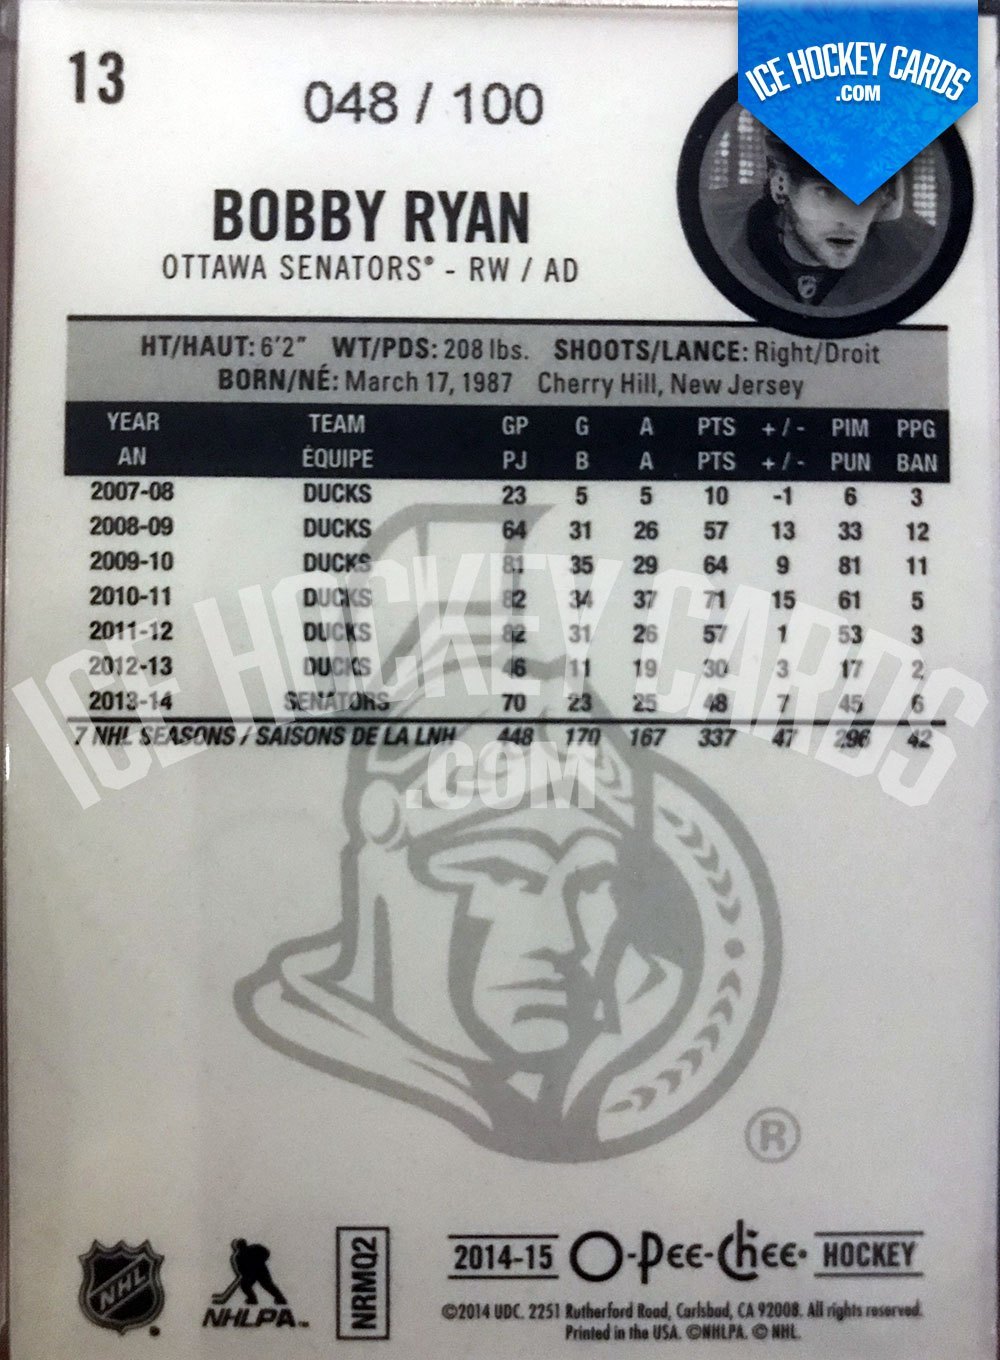 Upper Deck - O-Pee-Chee 14-15 - Bobby Ryan Black Rainbow Card back